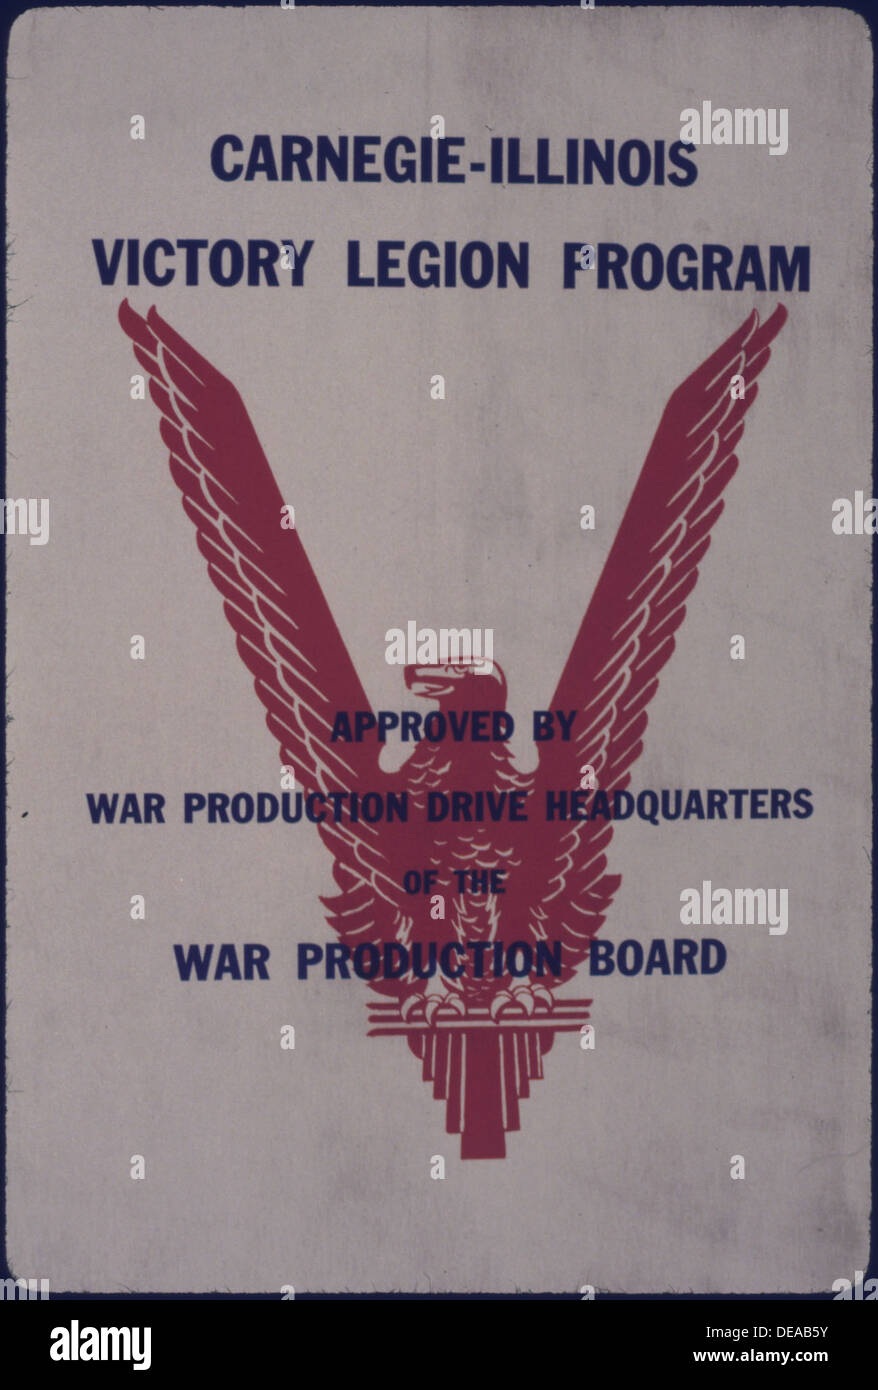 Carnegie-Illinois Sieg Legion Programm 534474 Stockfoto